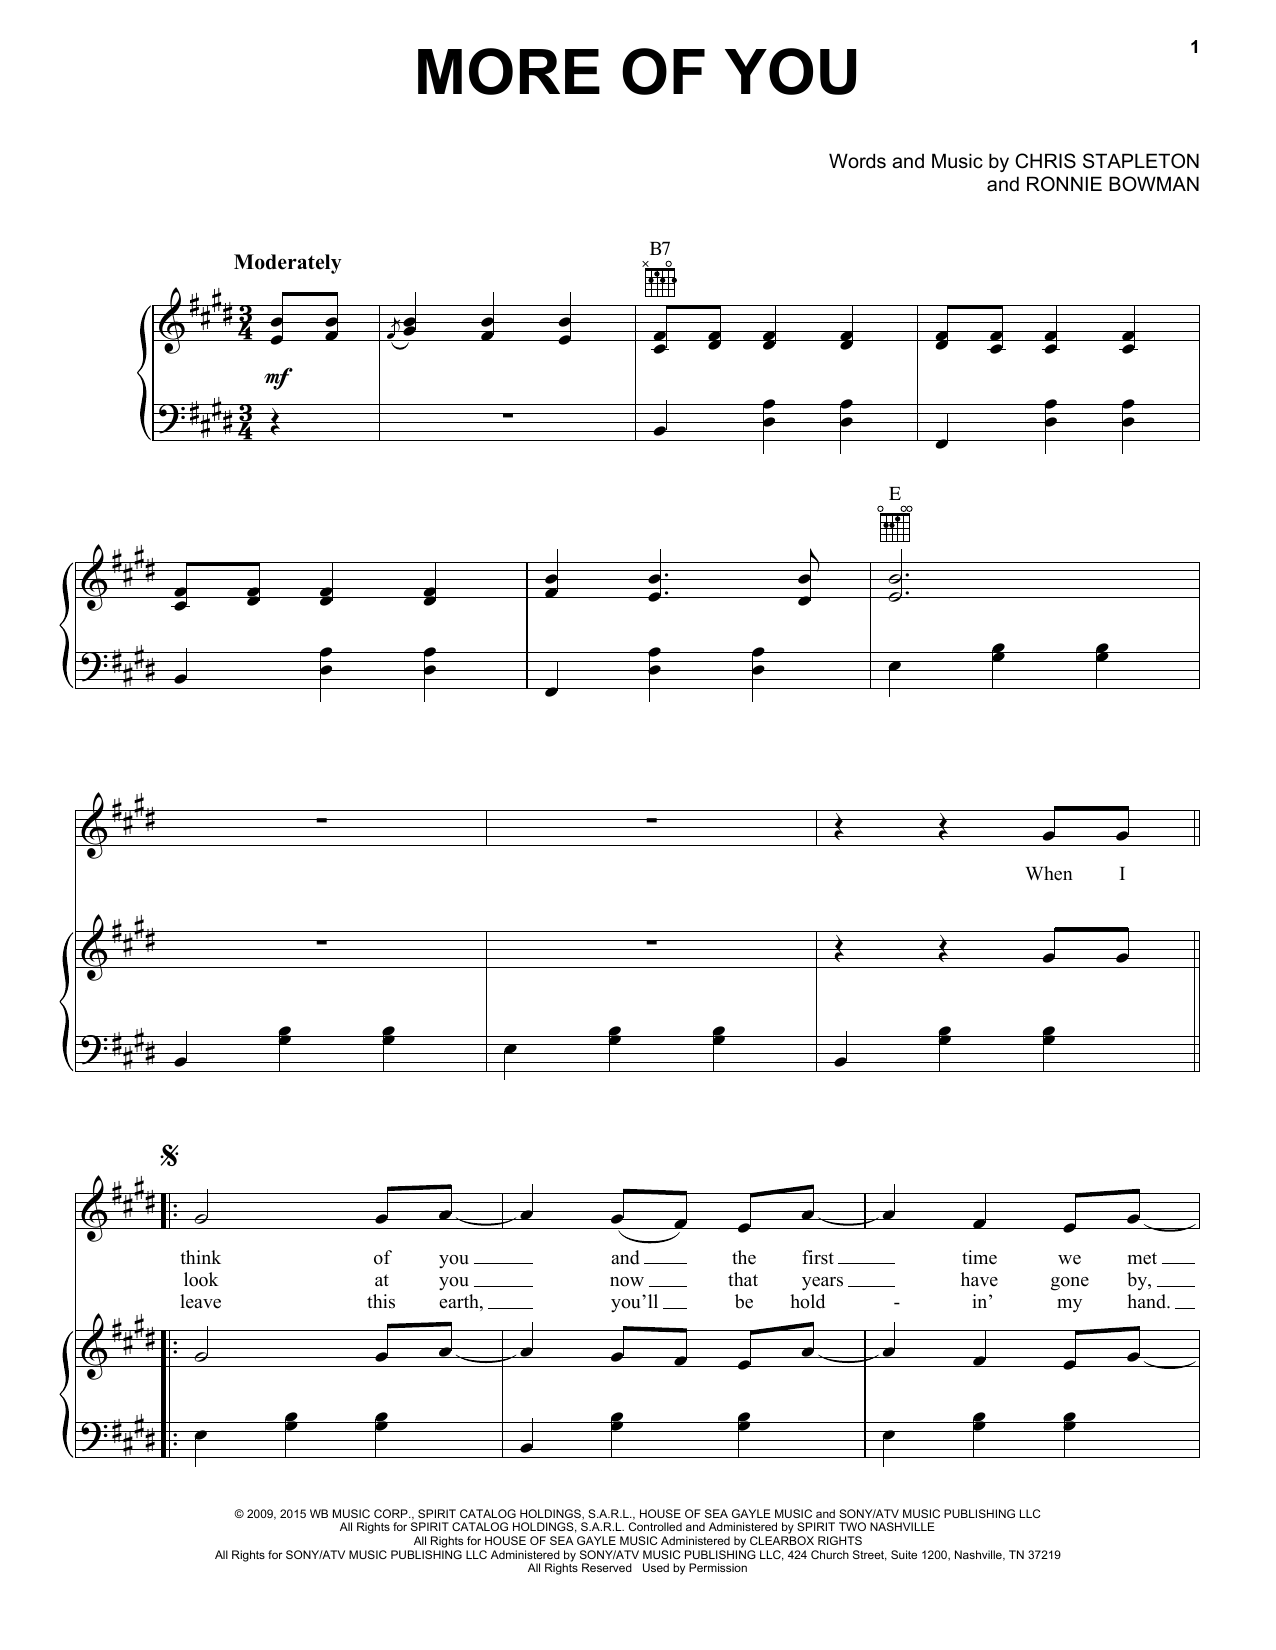 Chris Stapleton More Of You Sheet Music Notes & Chords for Guitar Chords/Lyrics - Download or Print PDF